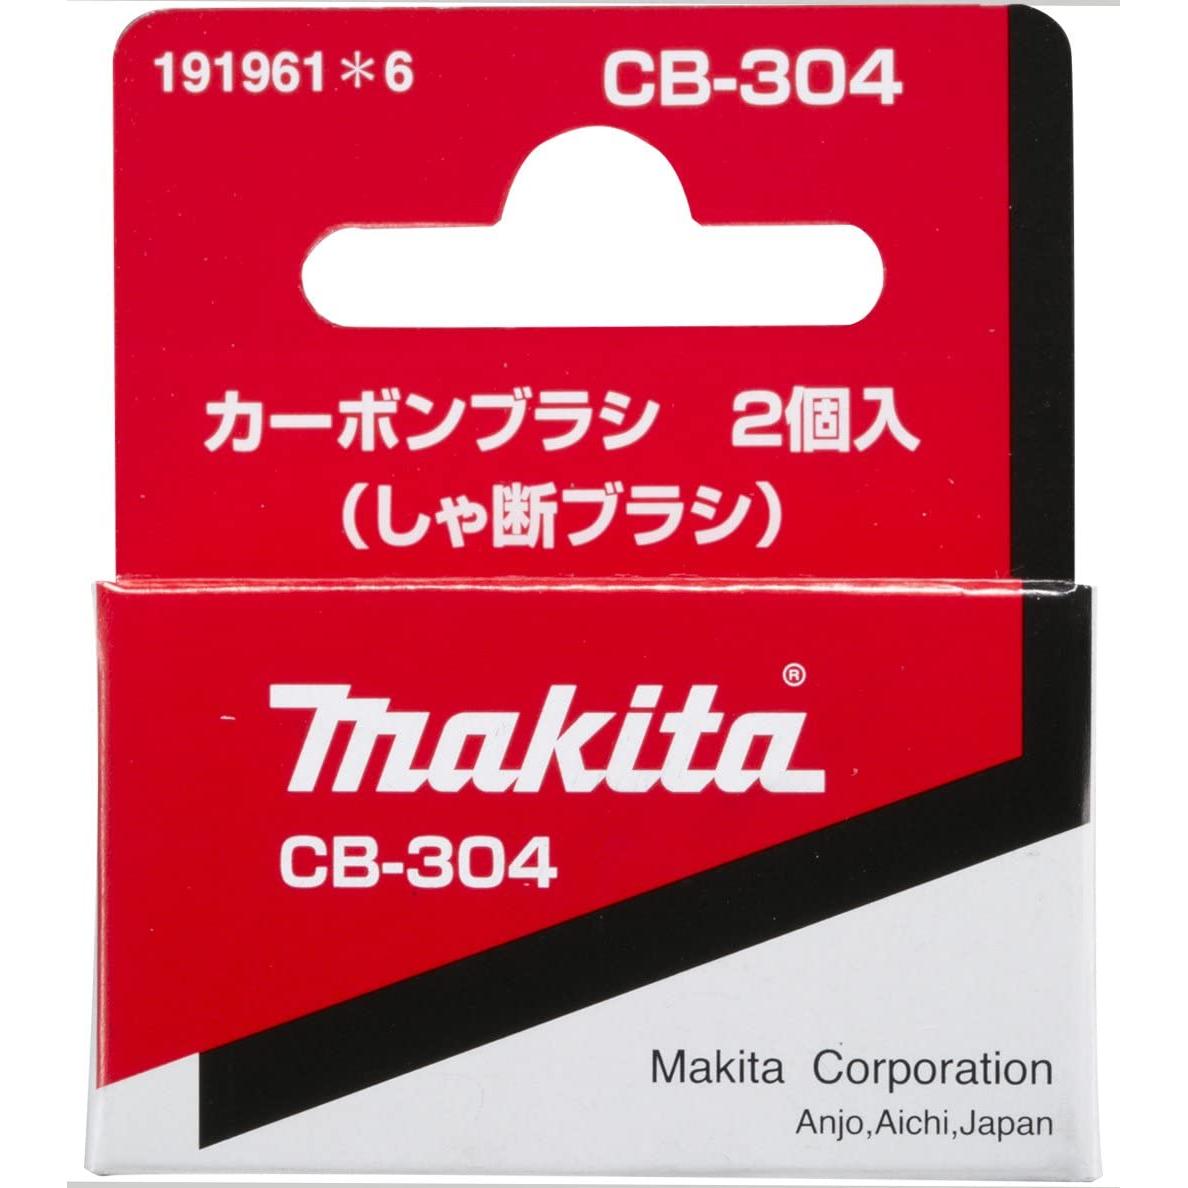 Makita Carbon Brush CB-304 Set 191961-6 Power Tool Services